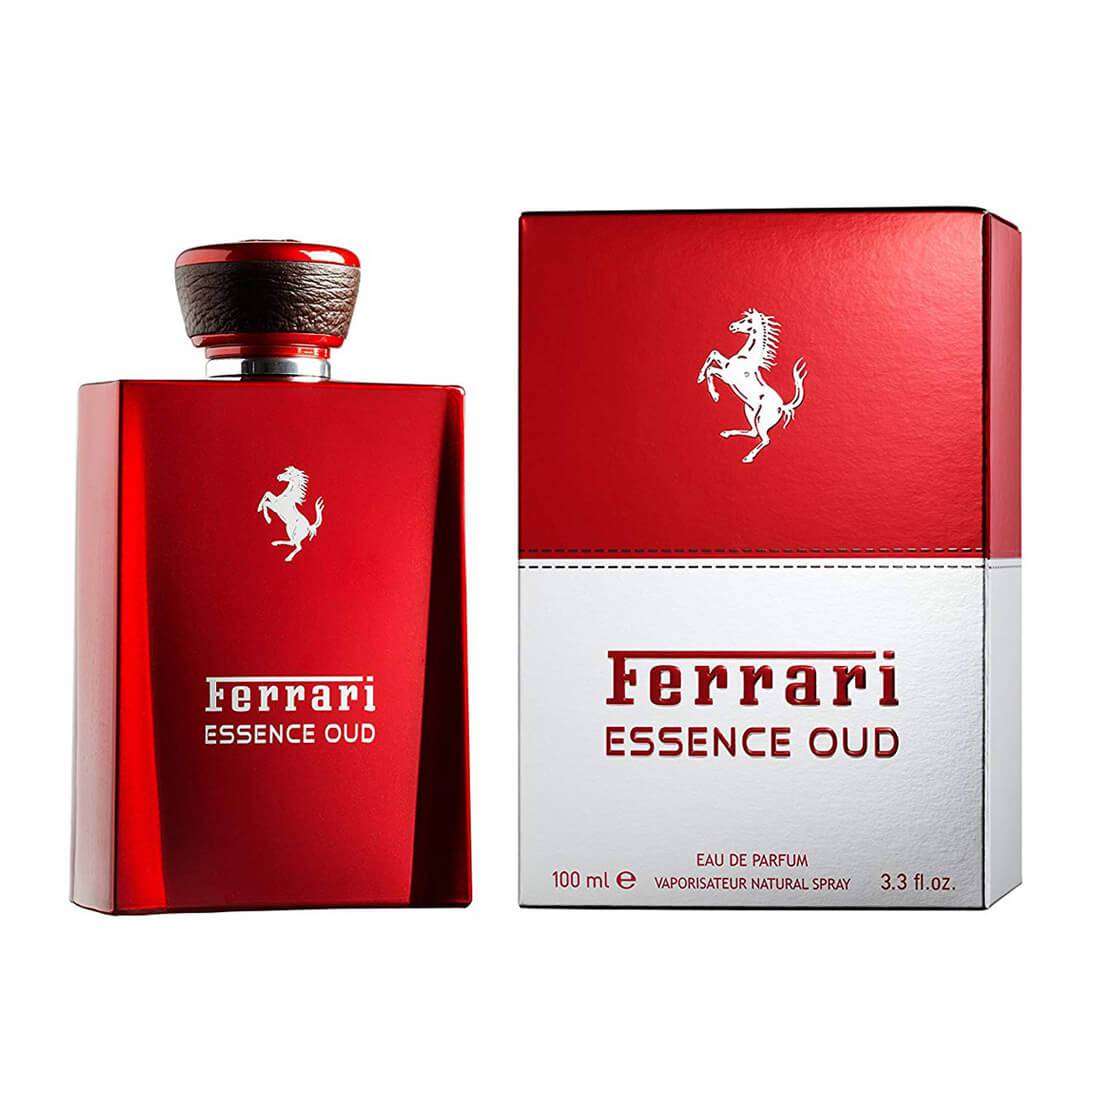 Ferrari Essence Oud Perfume - 100ml